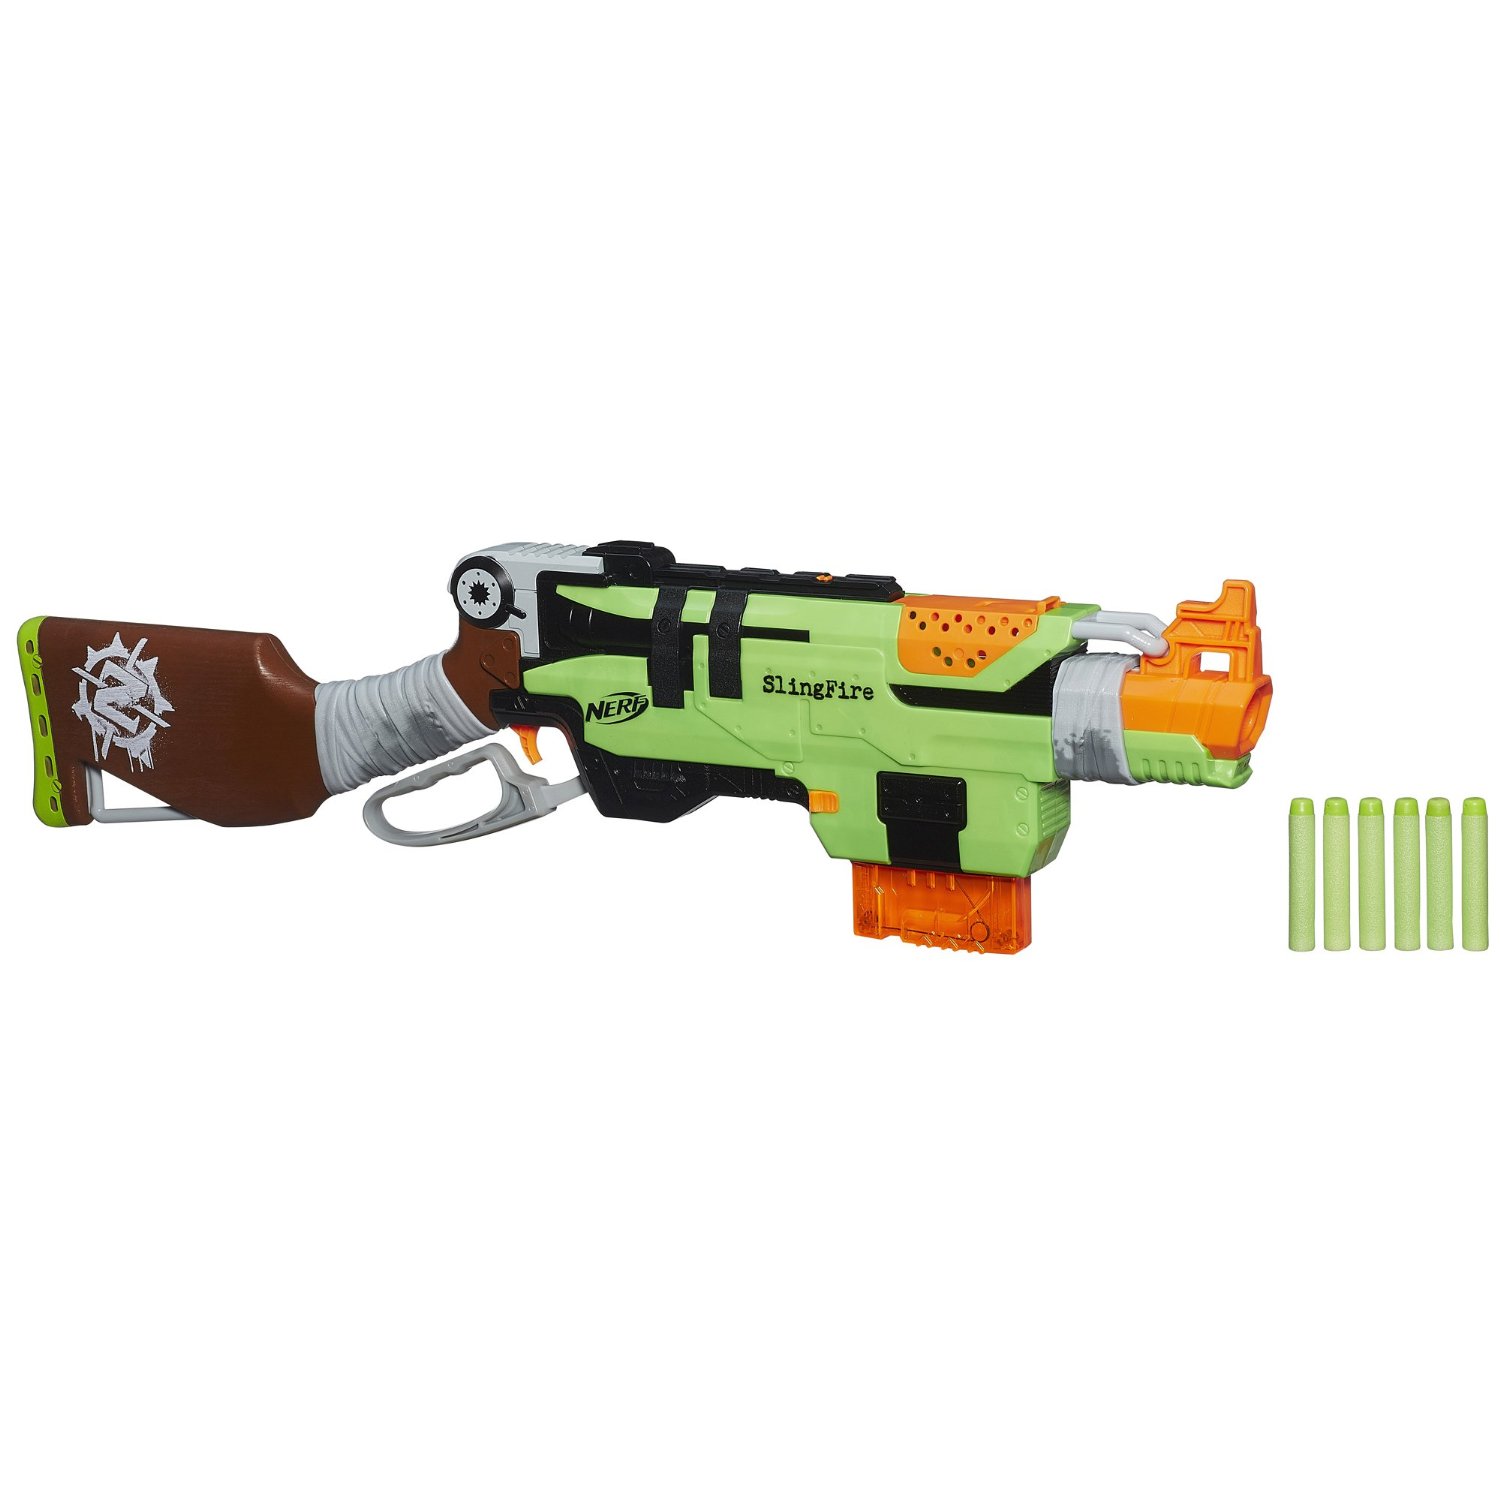 Nerf Zombie Strike SlingFire Blaster – Just $14.39!